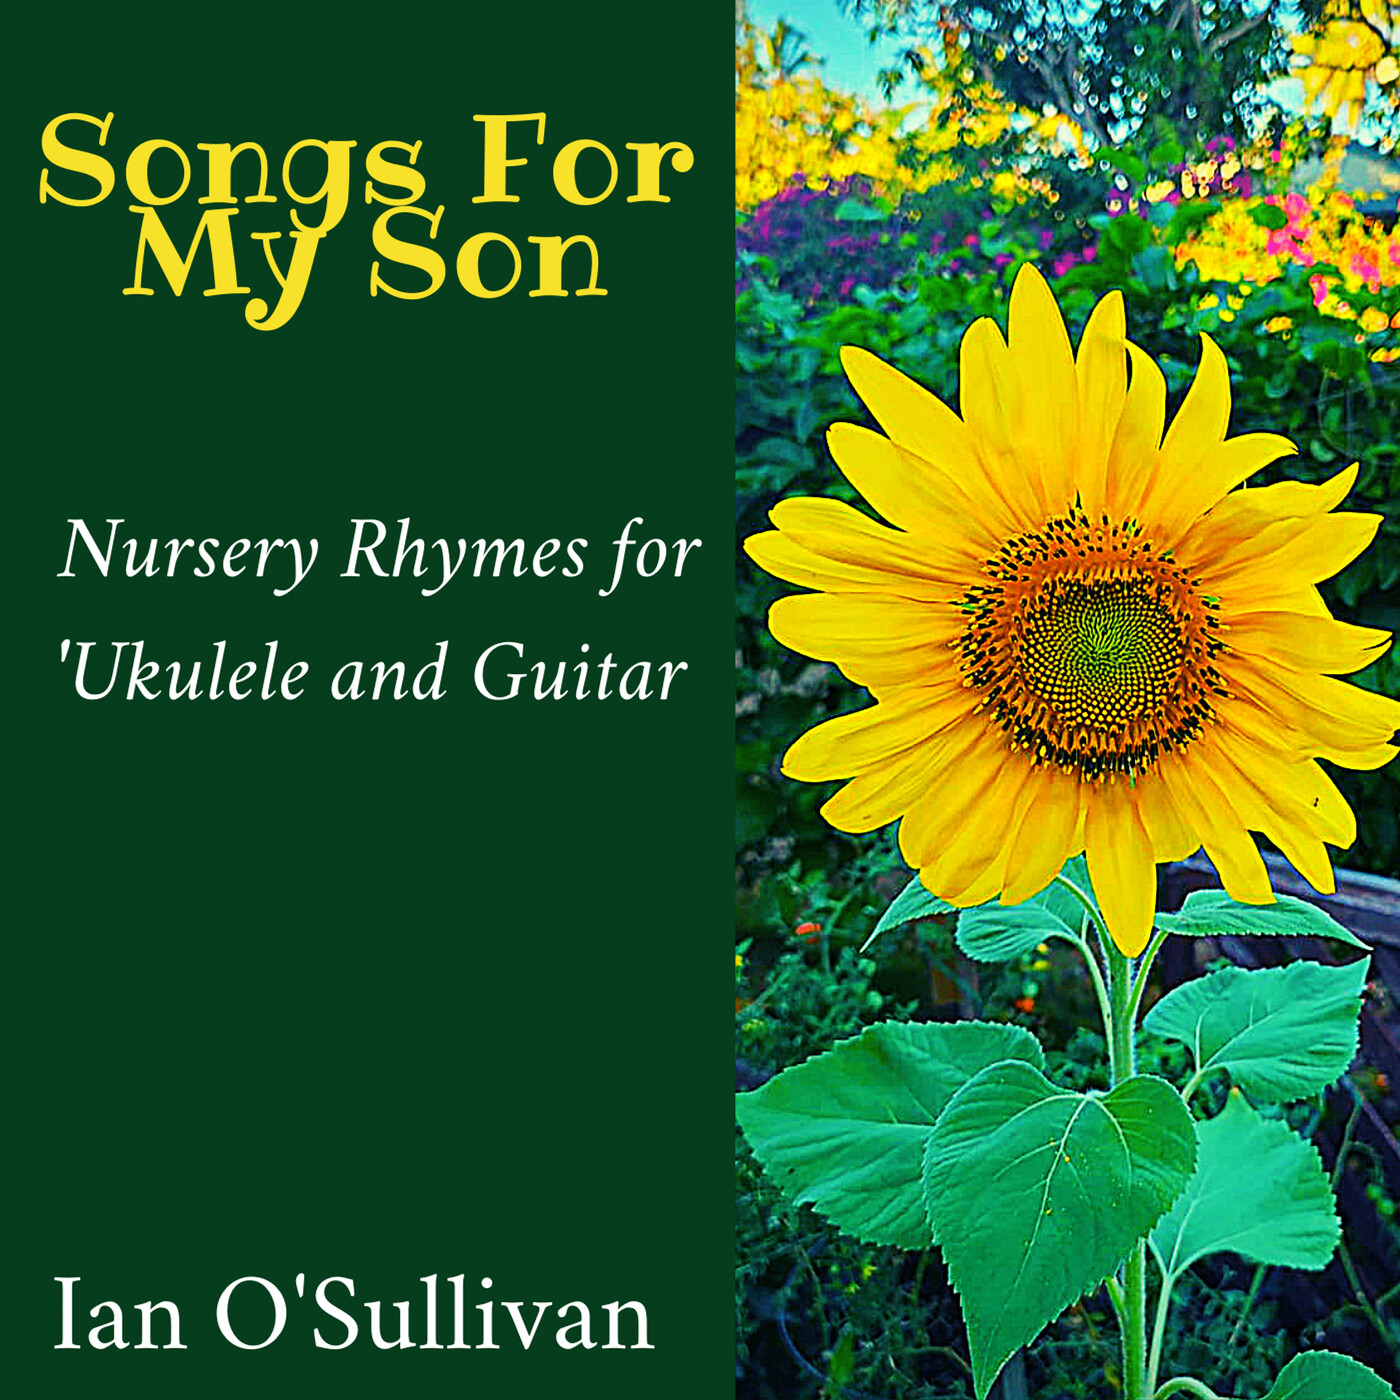 Songs For My Son - Ian O'Sullivan - (DIGITAL DOWNLOAD)